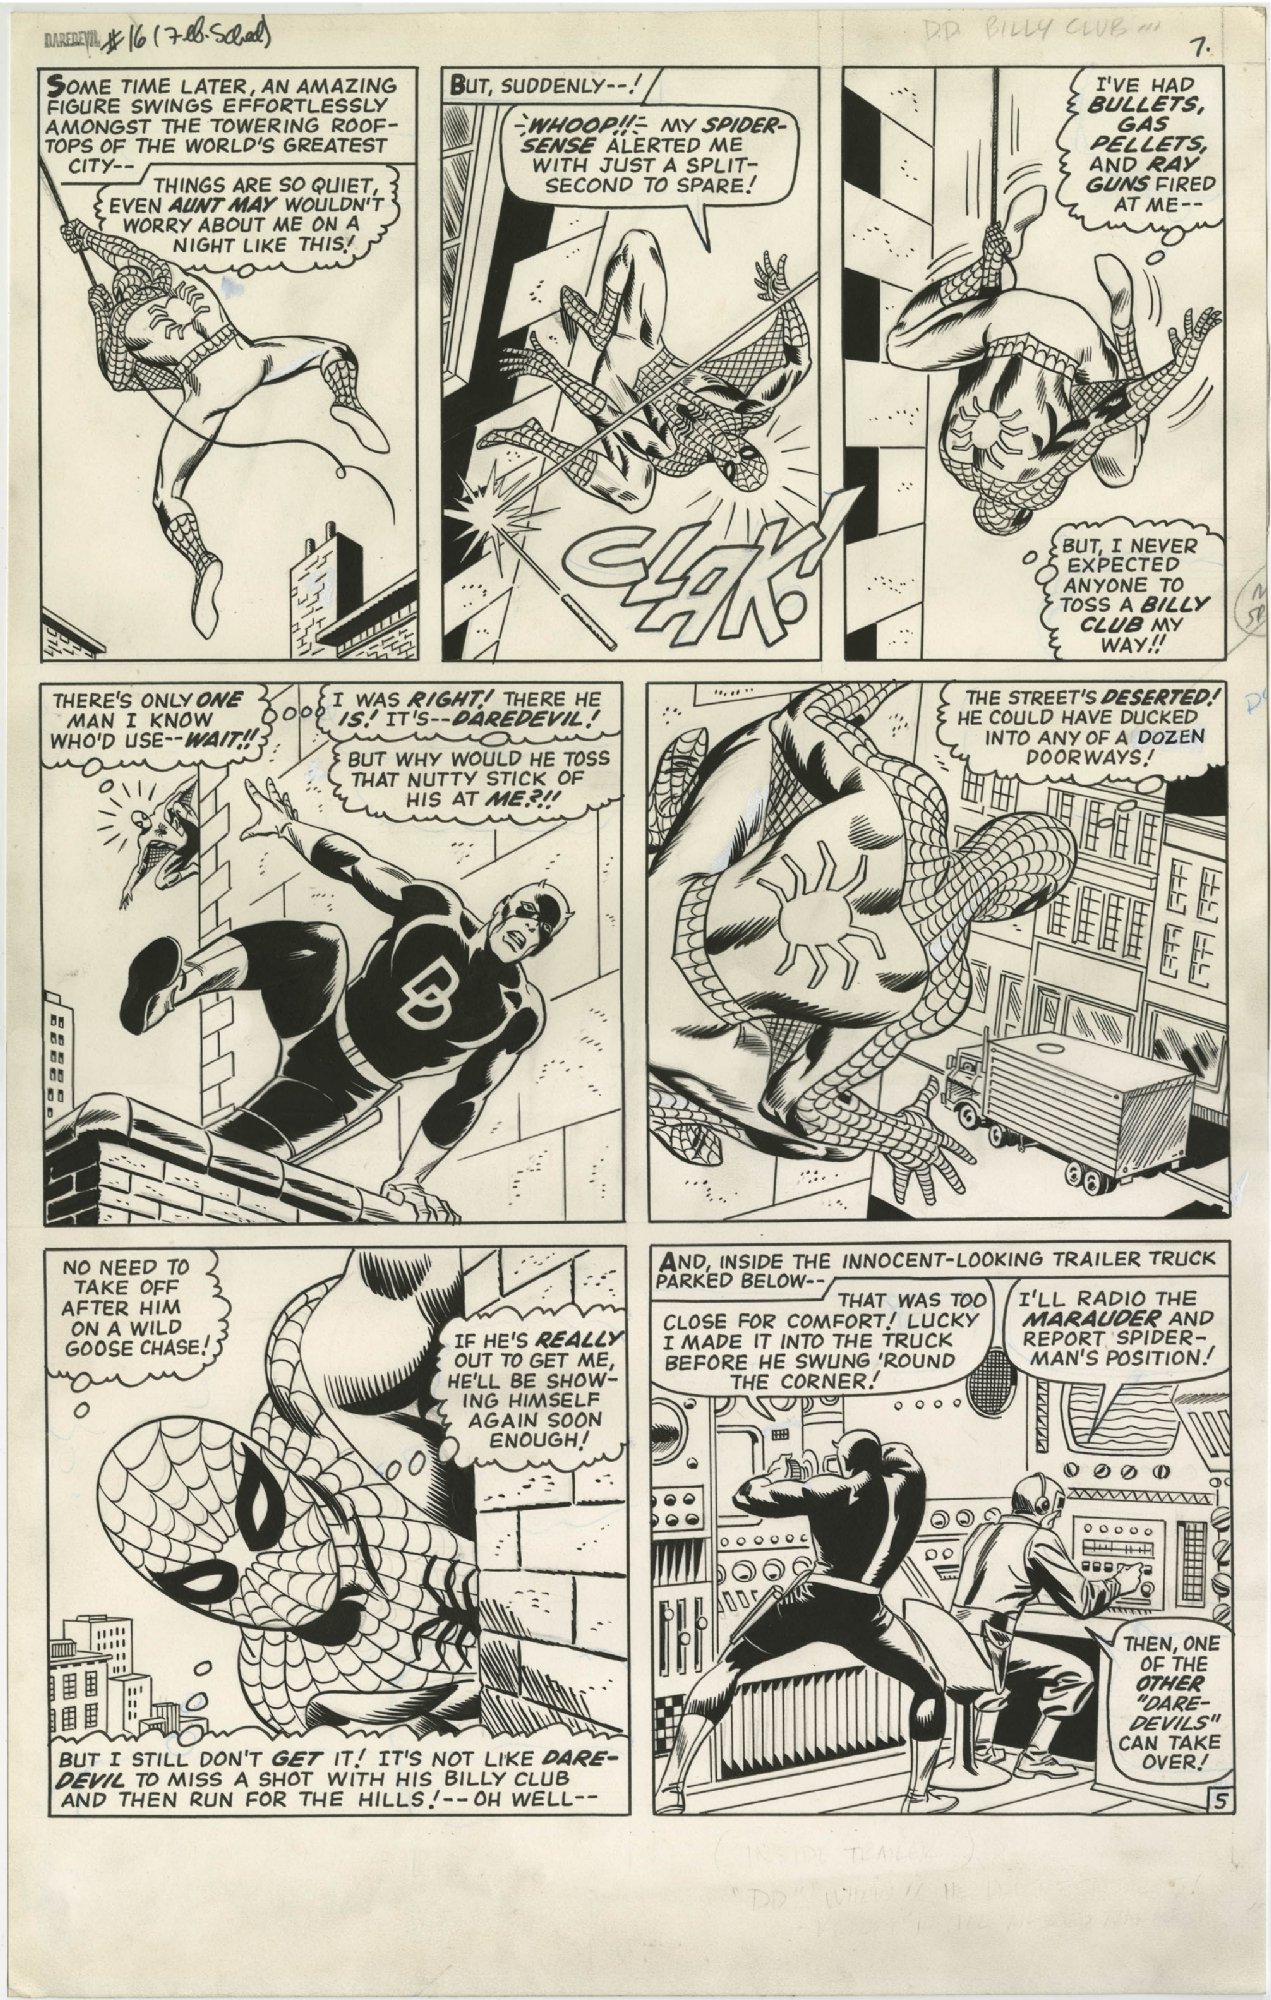 Spider-Man Notes 🕸 on X: Classic Daredevil 16 Cover Artwork by John  Romita Sr. #SpiderMan #Daredevil #XTwitter #Marvel #MarvelComics #comicart  #comicbookart #comicbook #comicbooks #SpiderVerse   / X